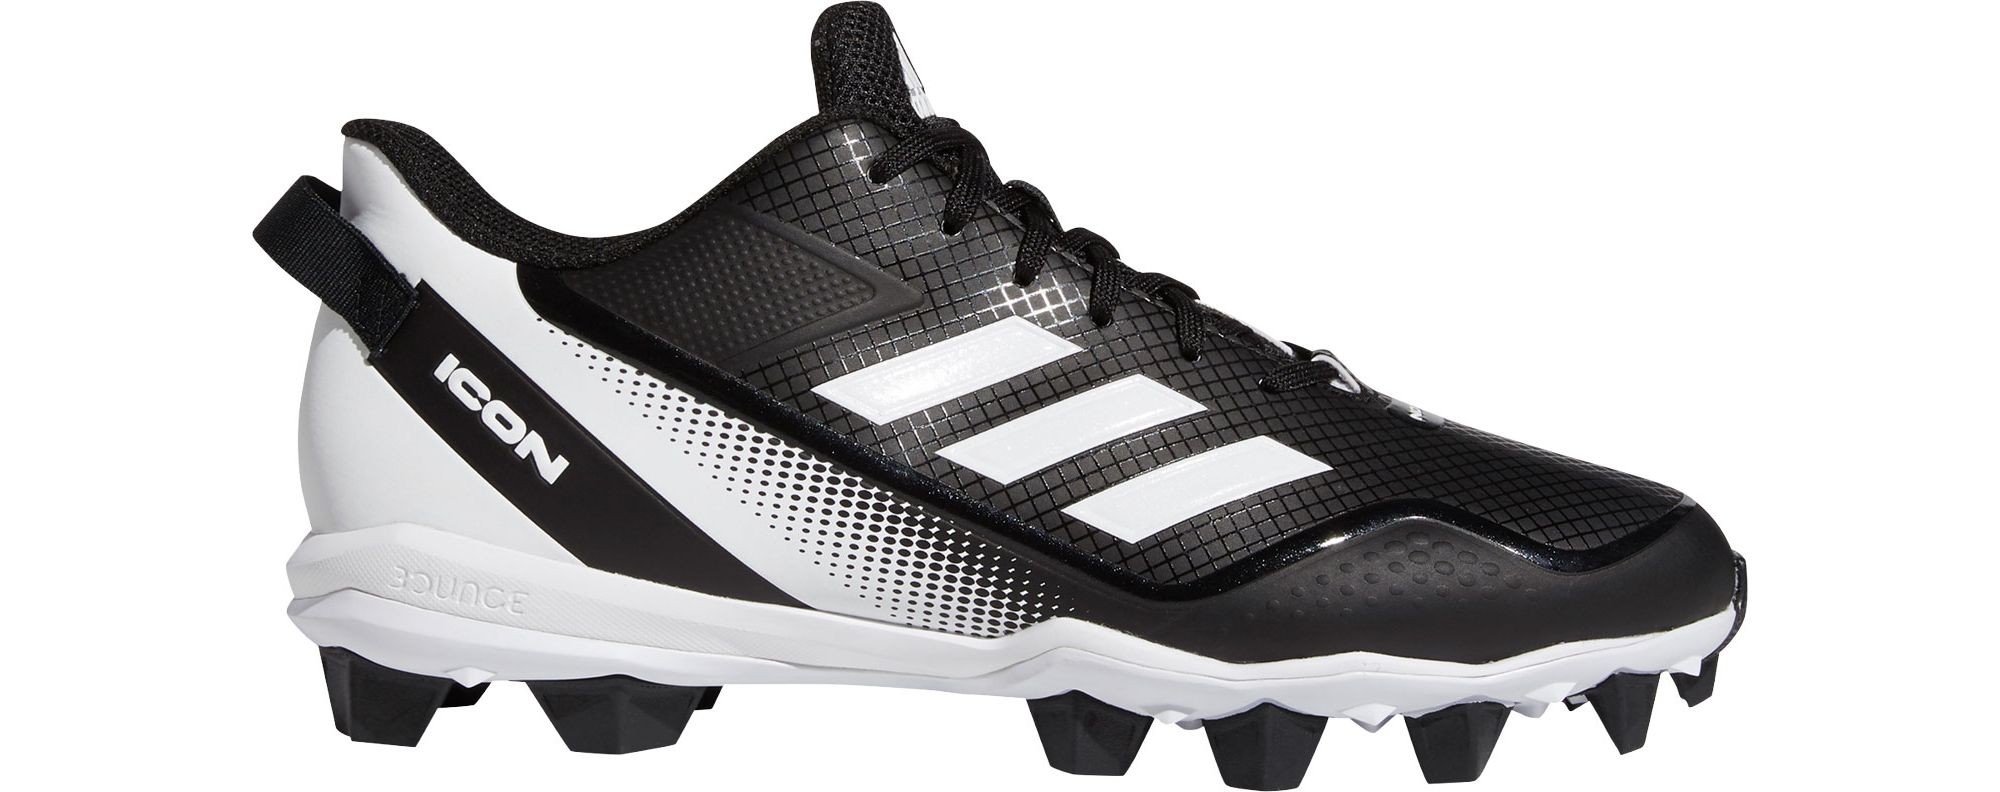 adidas Men's Icon 7 MD Baseball Cleats Footwear Adidas Core Black/Footwear White/Footwear White-S23915 6.5 